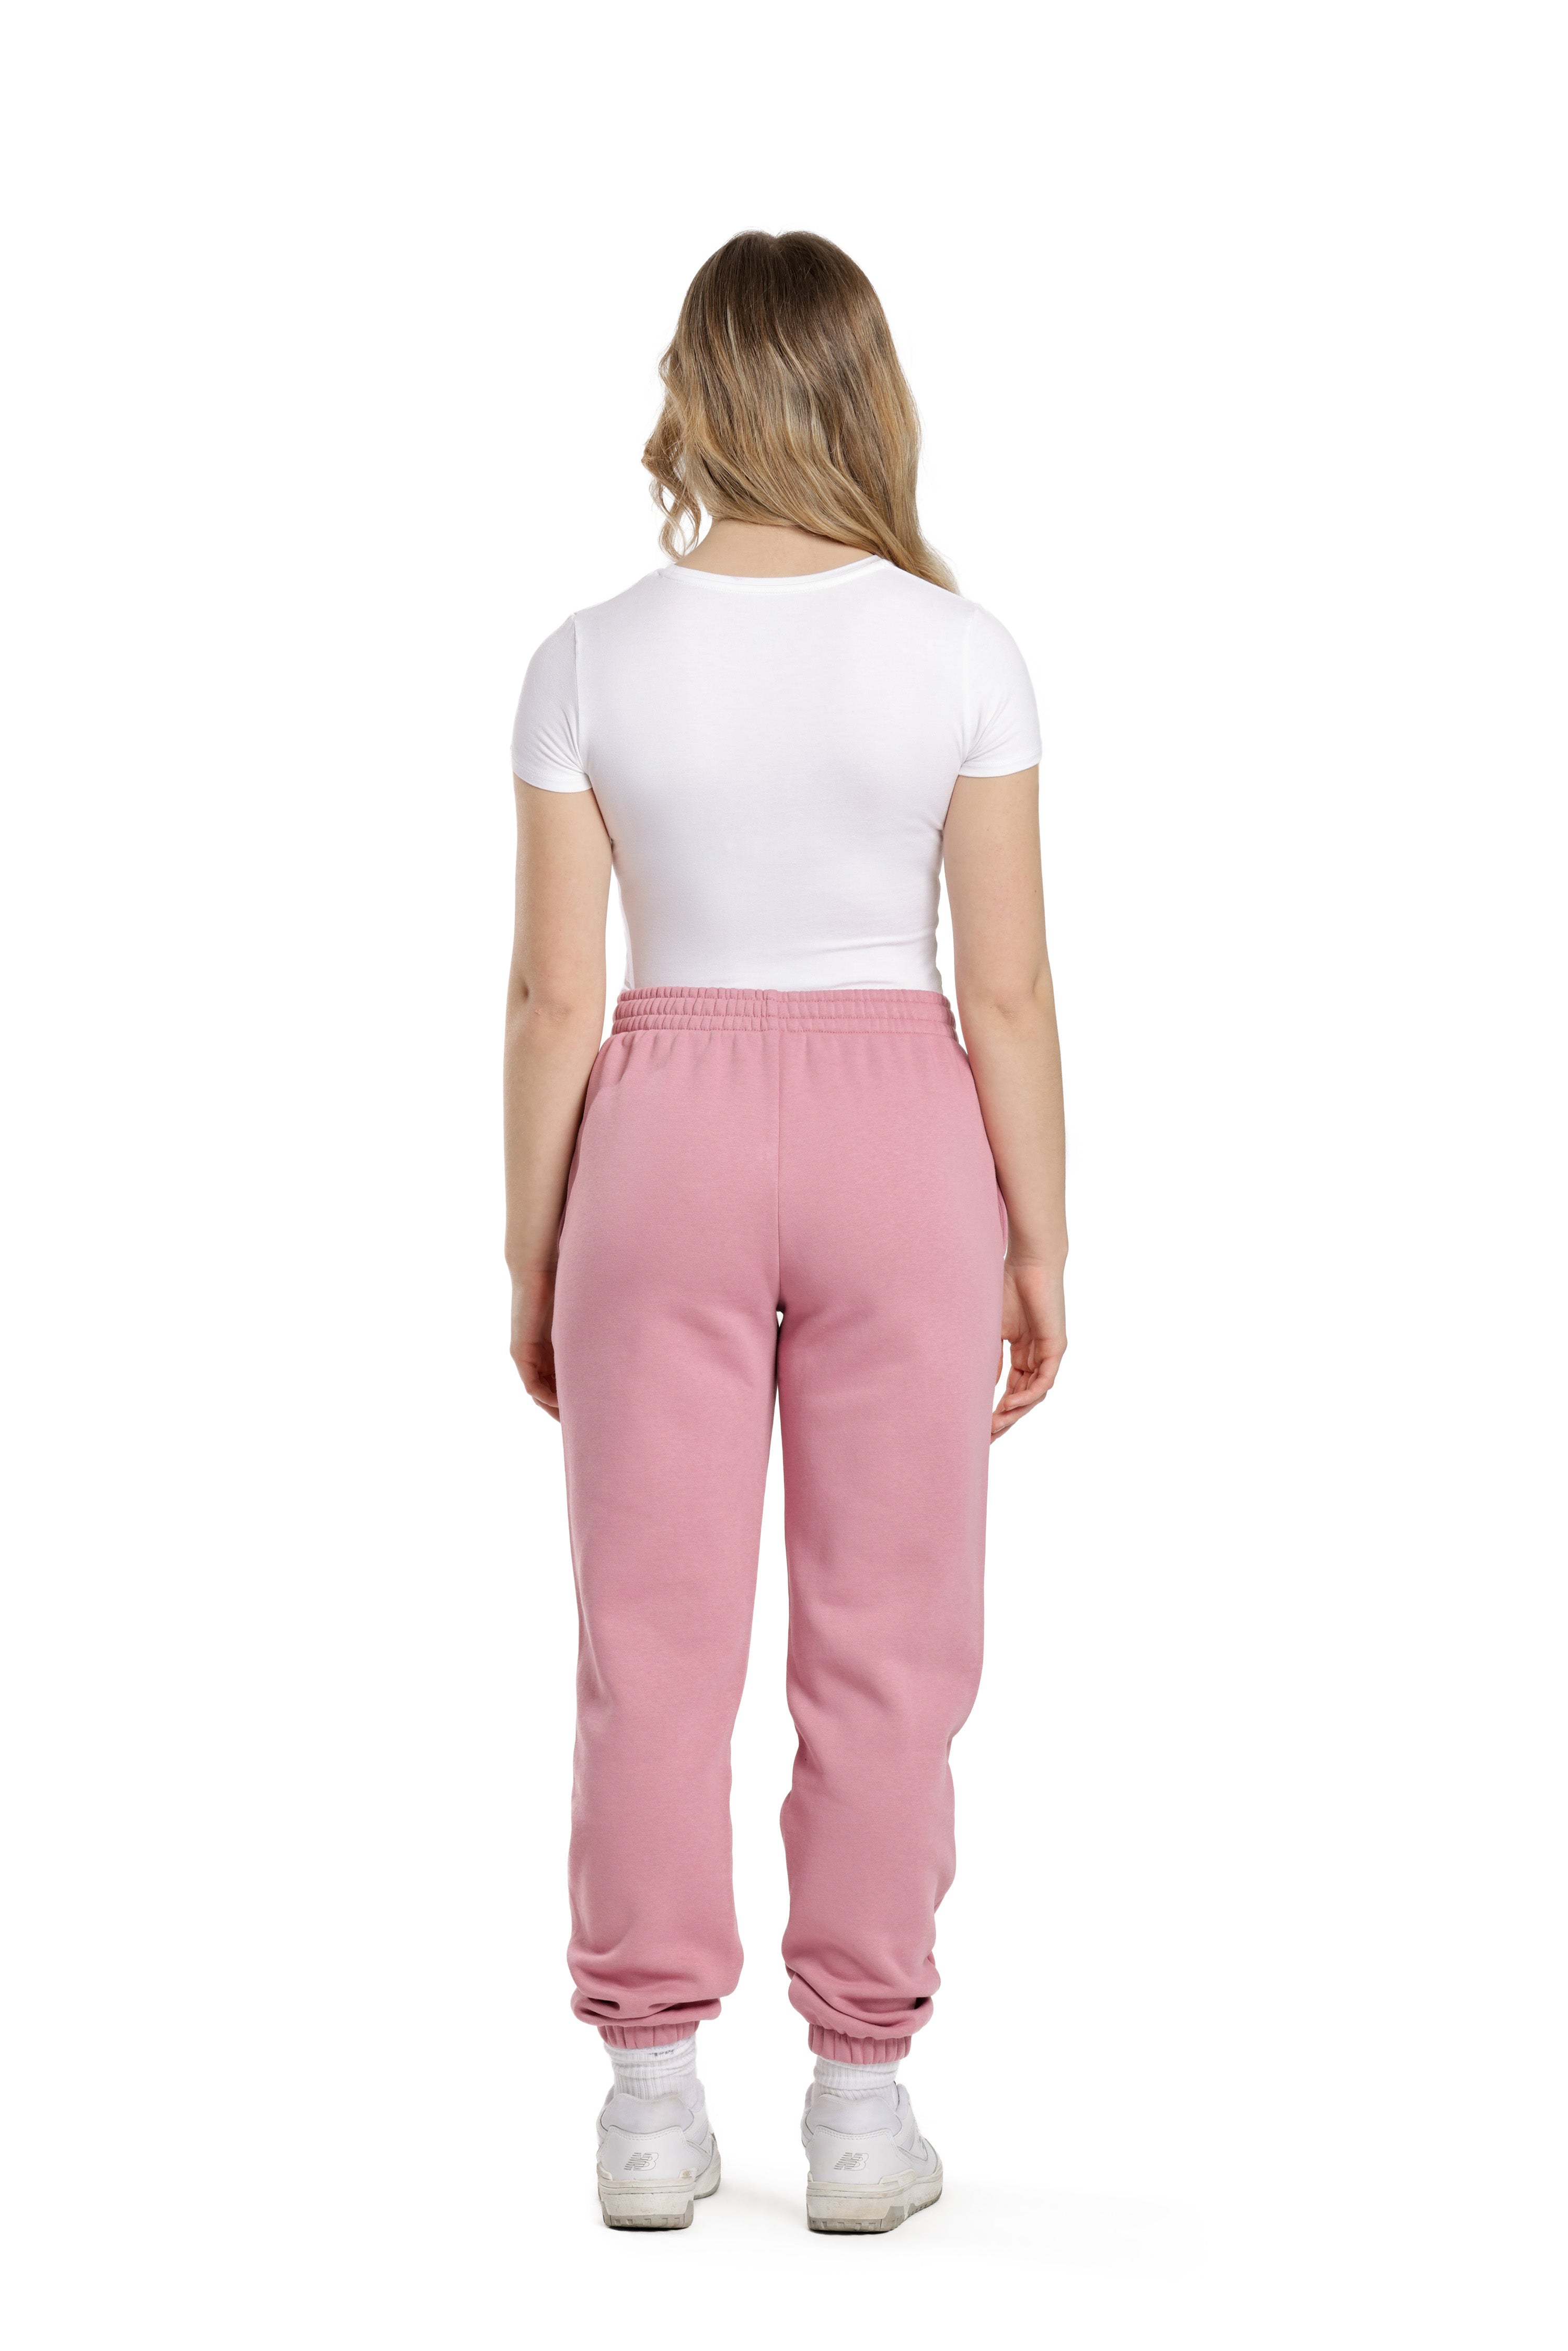 Printing Blue and Pink Jogger Sweat Pants for Girls - China Jogger